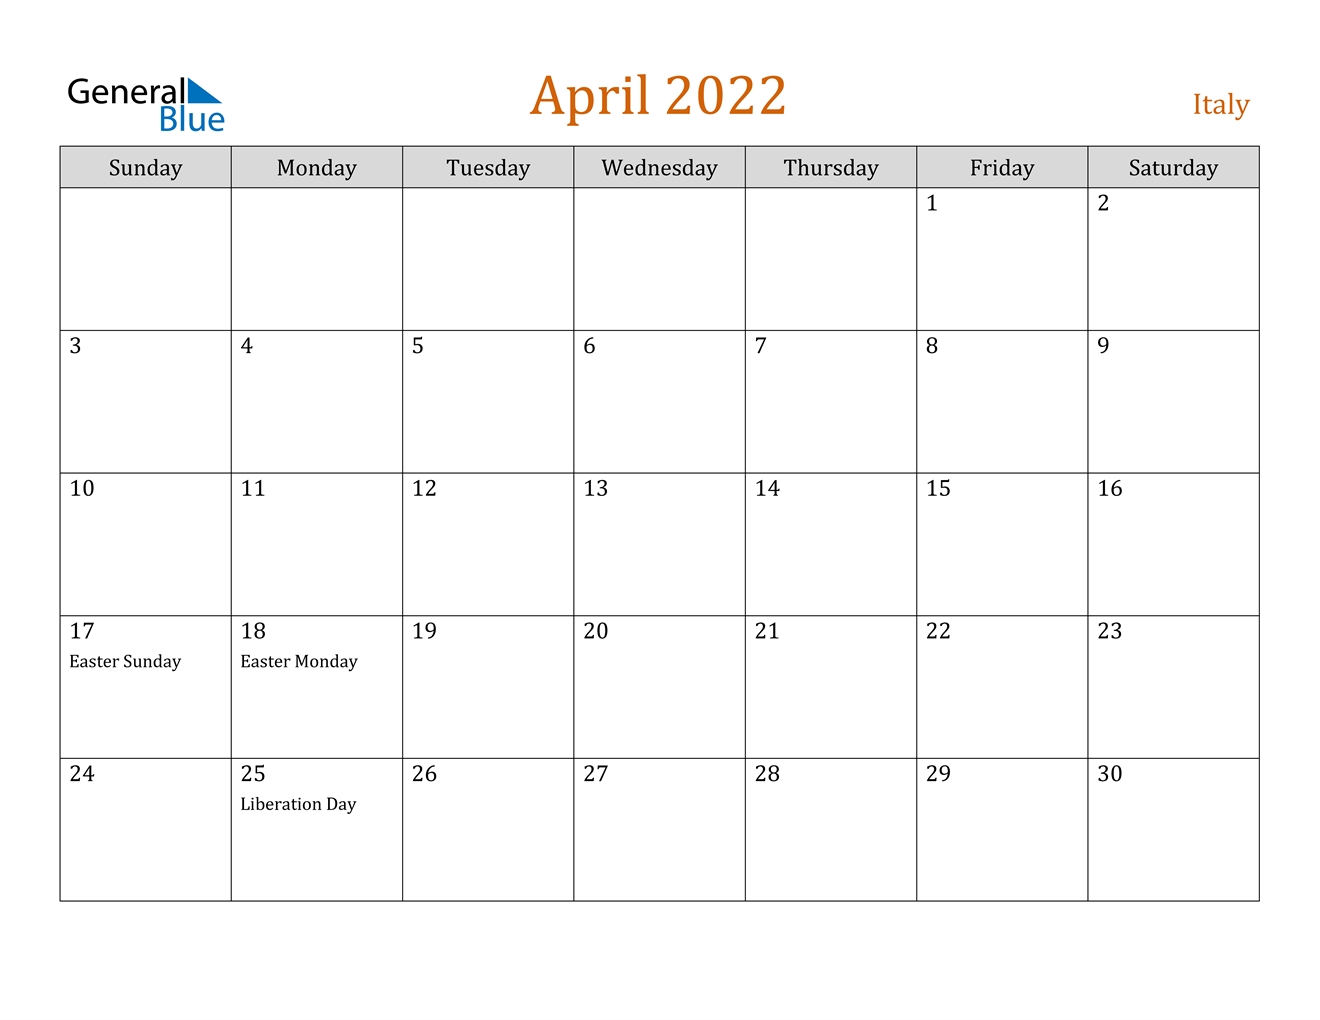 April 2022 Calendar - Italy